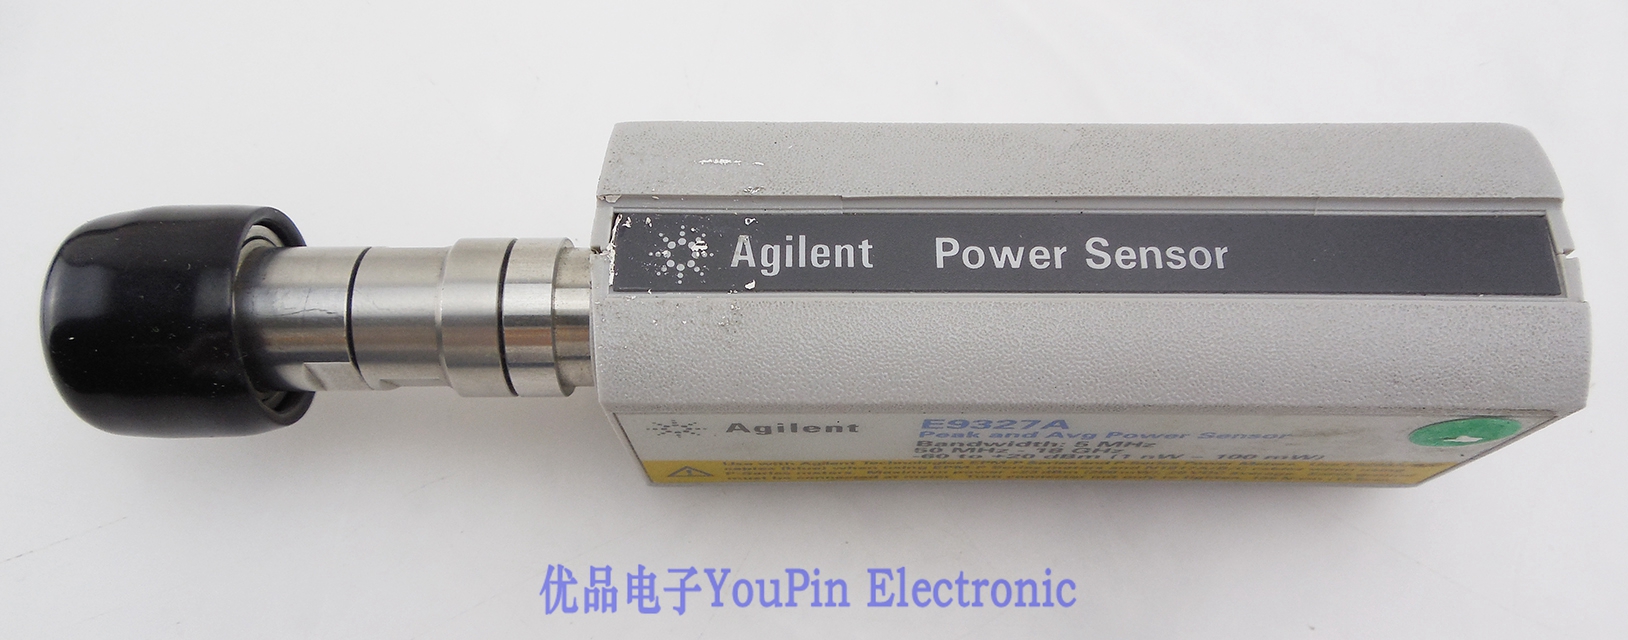 Keysight(Agilent) E9327A E-Series Peak and Average Power Sensor